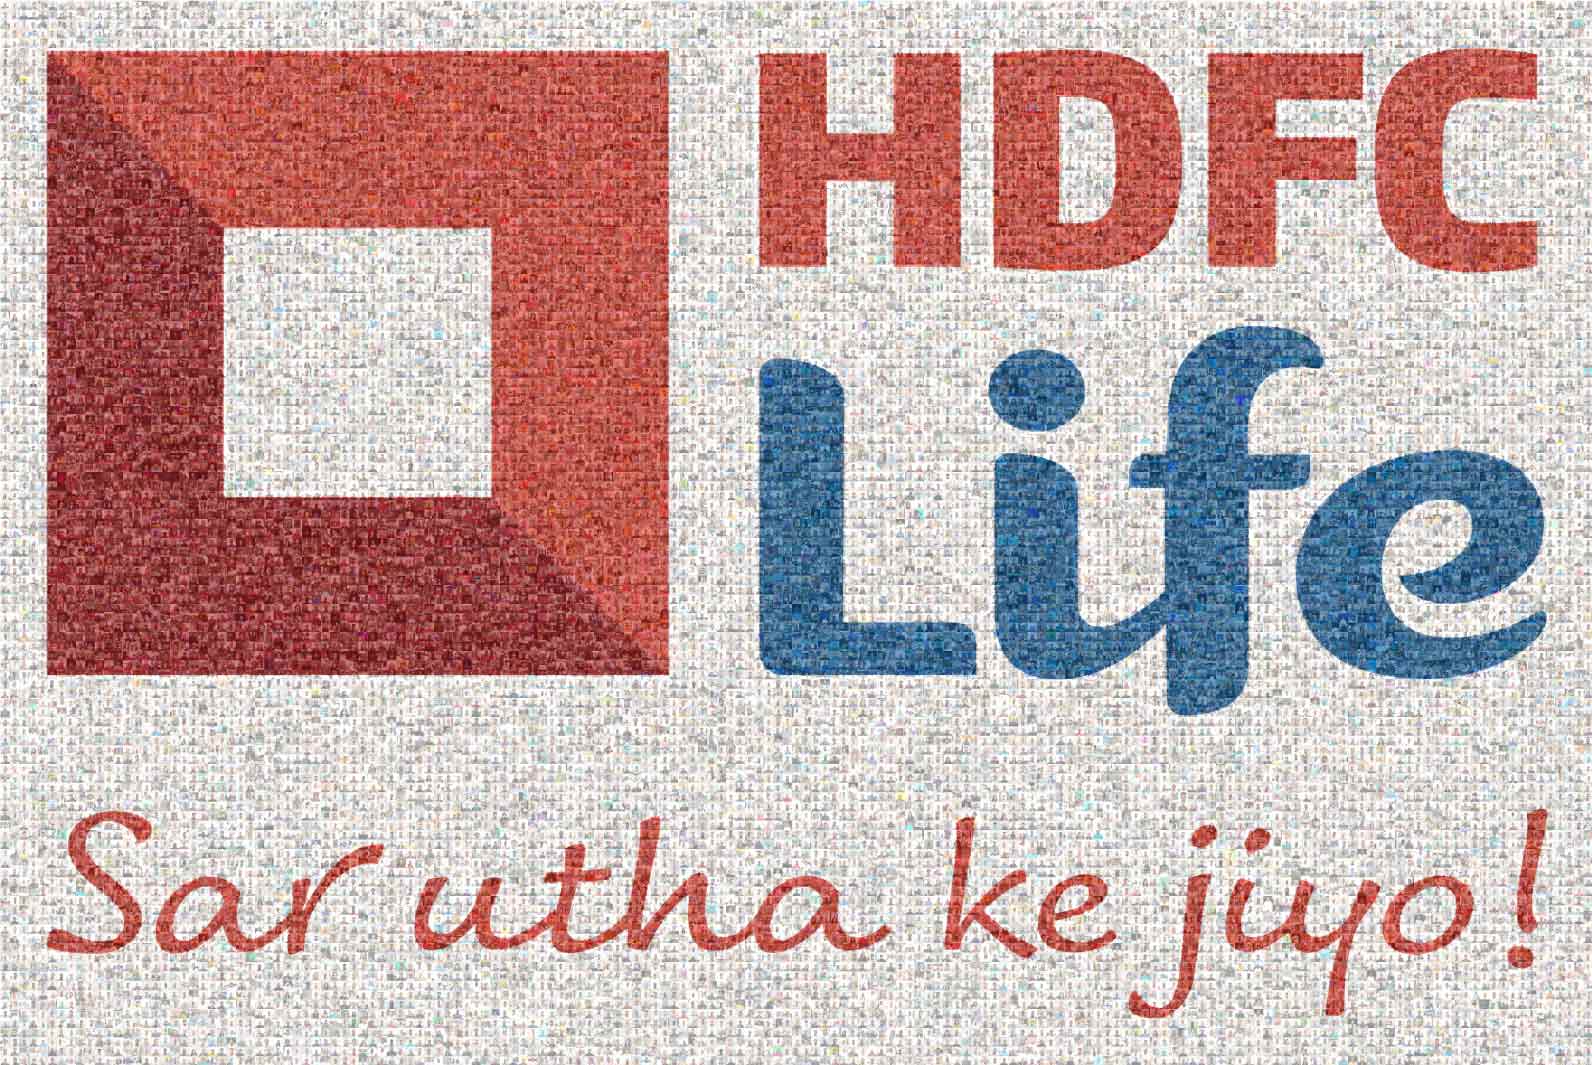 HDFC Life Insurance, Sportskeeda team-up for IPL 2020